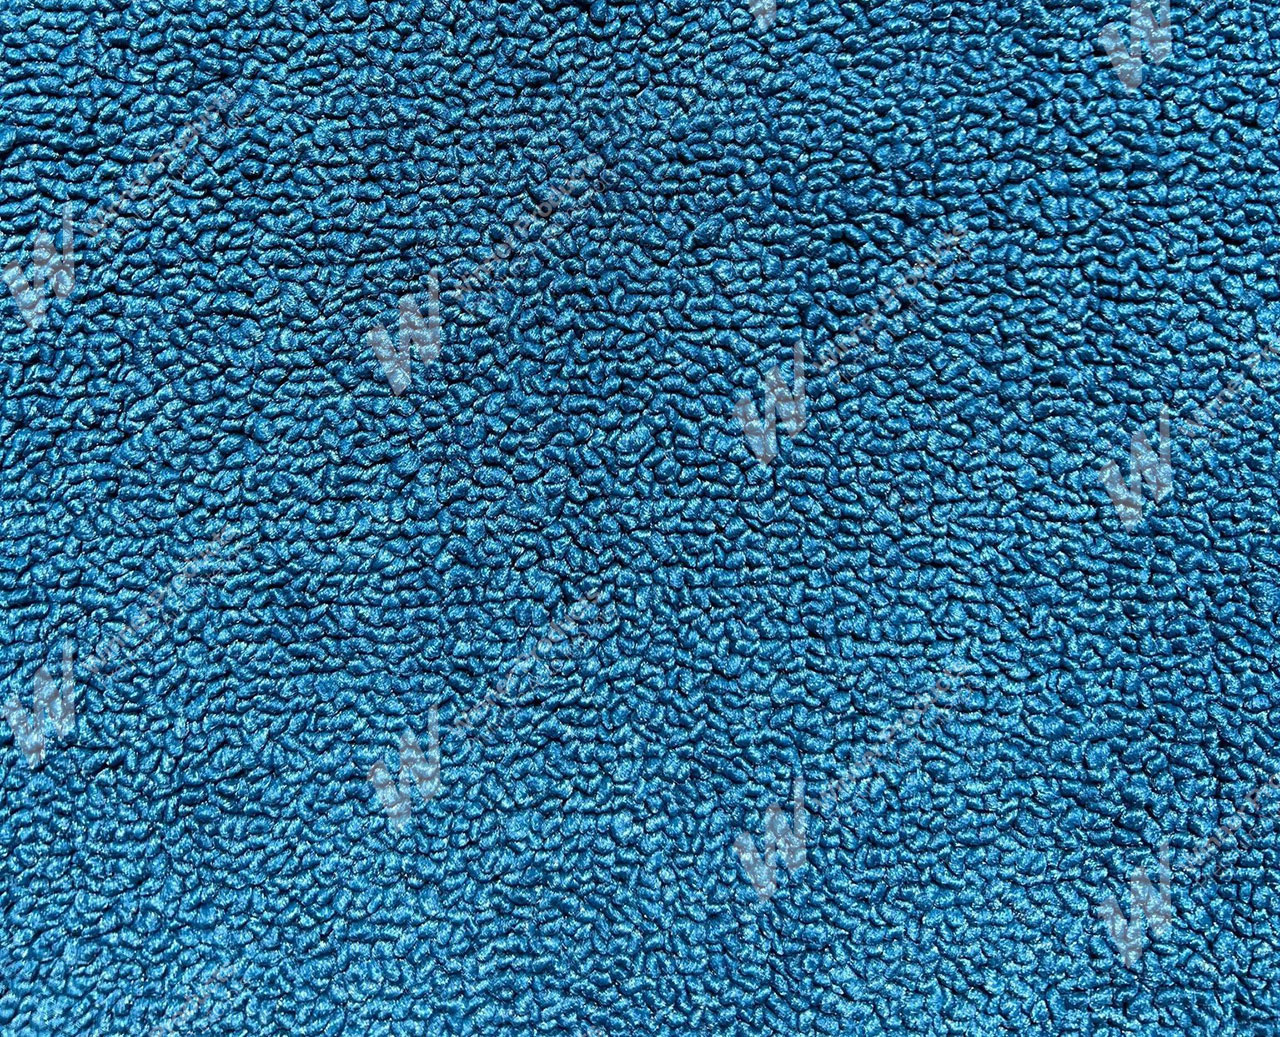 Holden Standard HR Standard Panel Van E74 Dover Blue Carpet (Image 1 of 1)